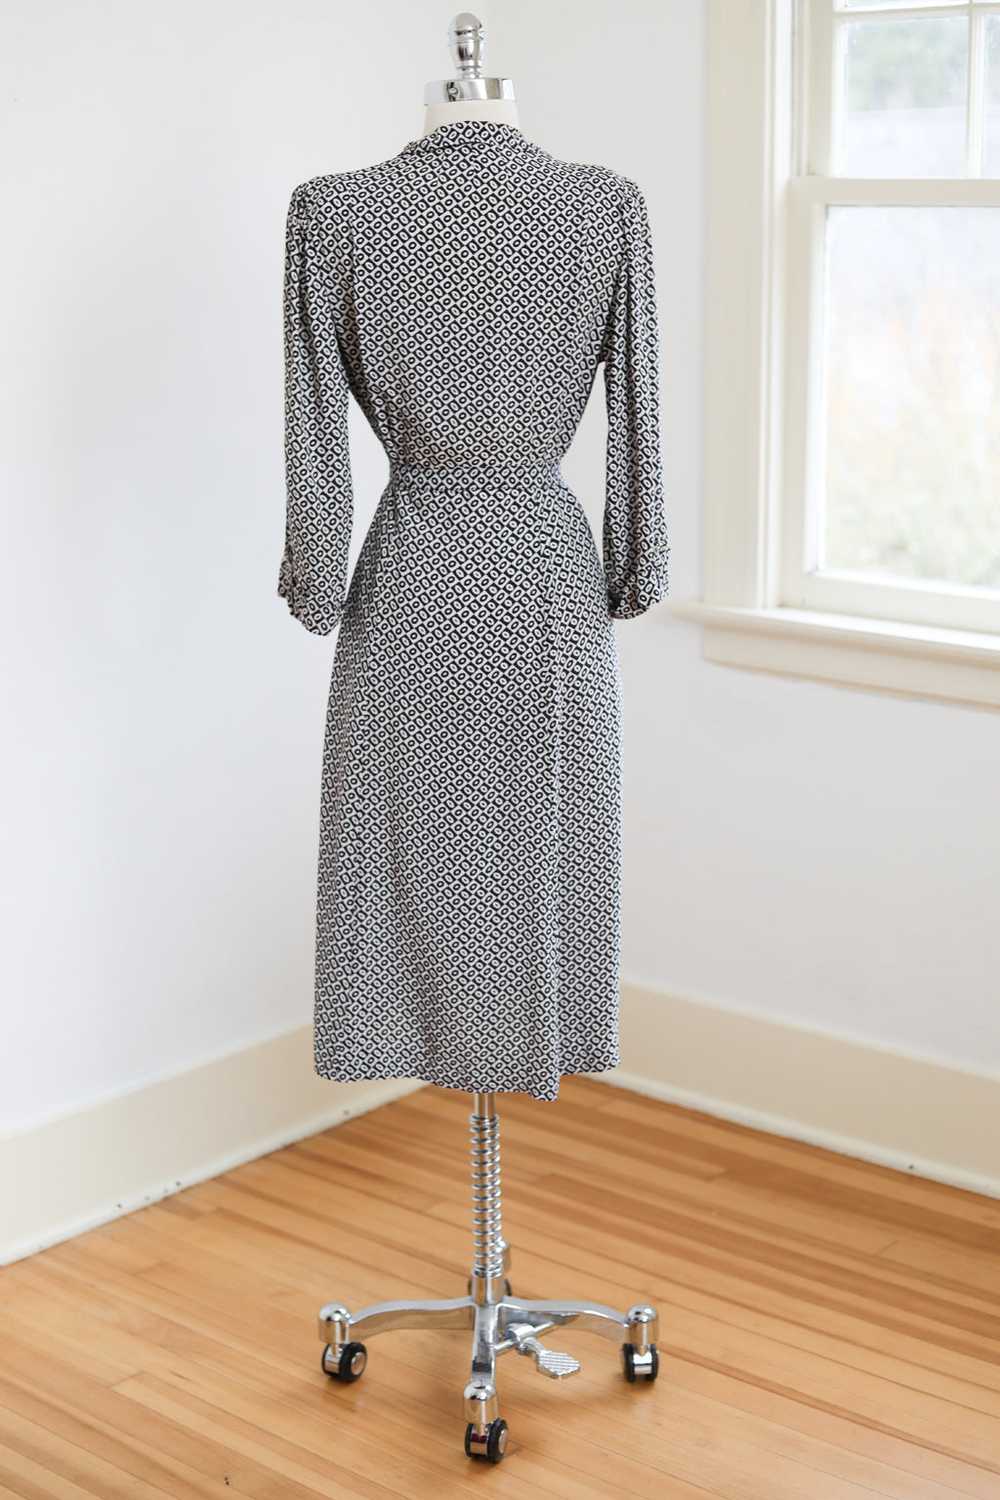 Vintage 1940s Cold Rayon Print Dress - VOLUP Blac… - image 8